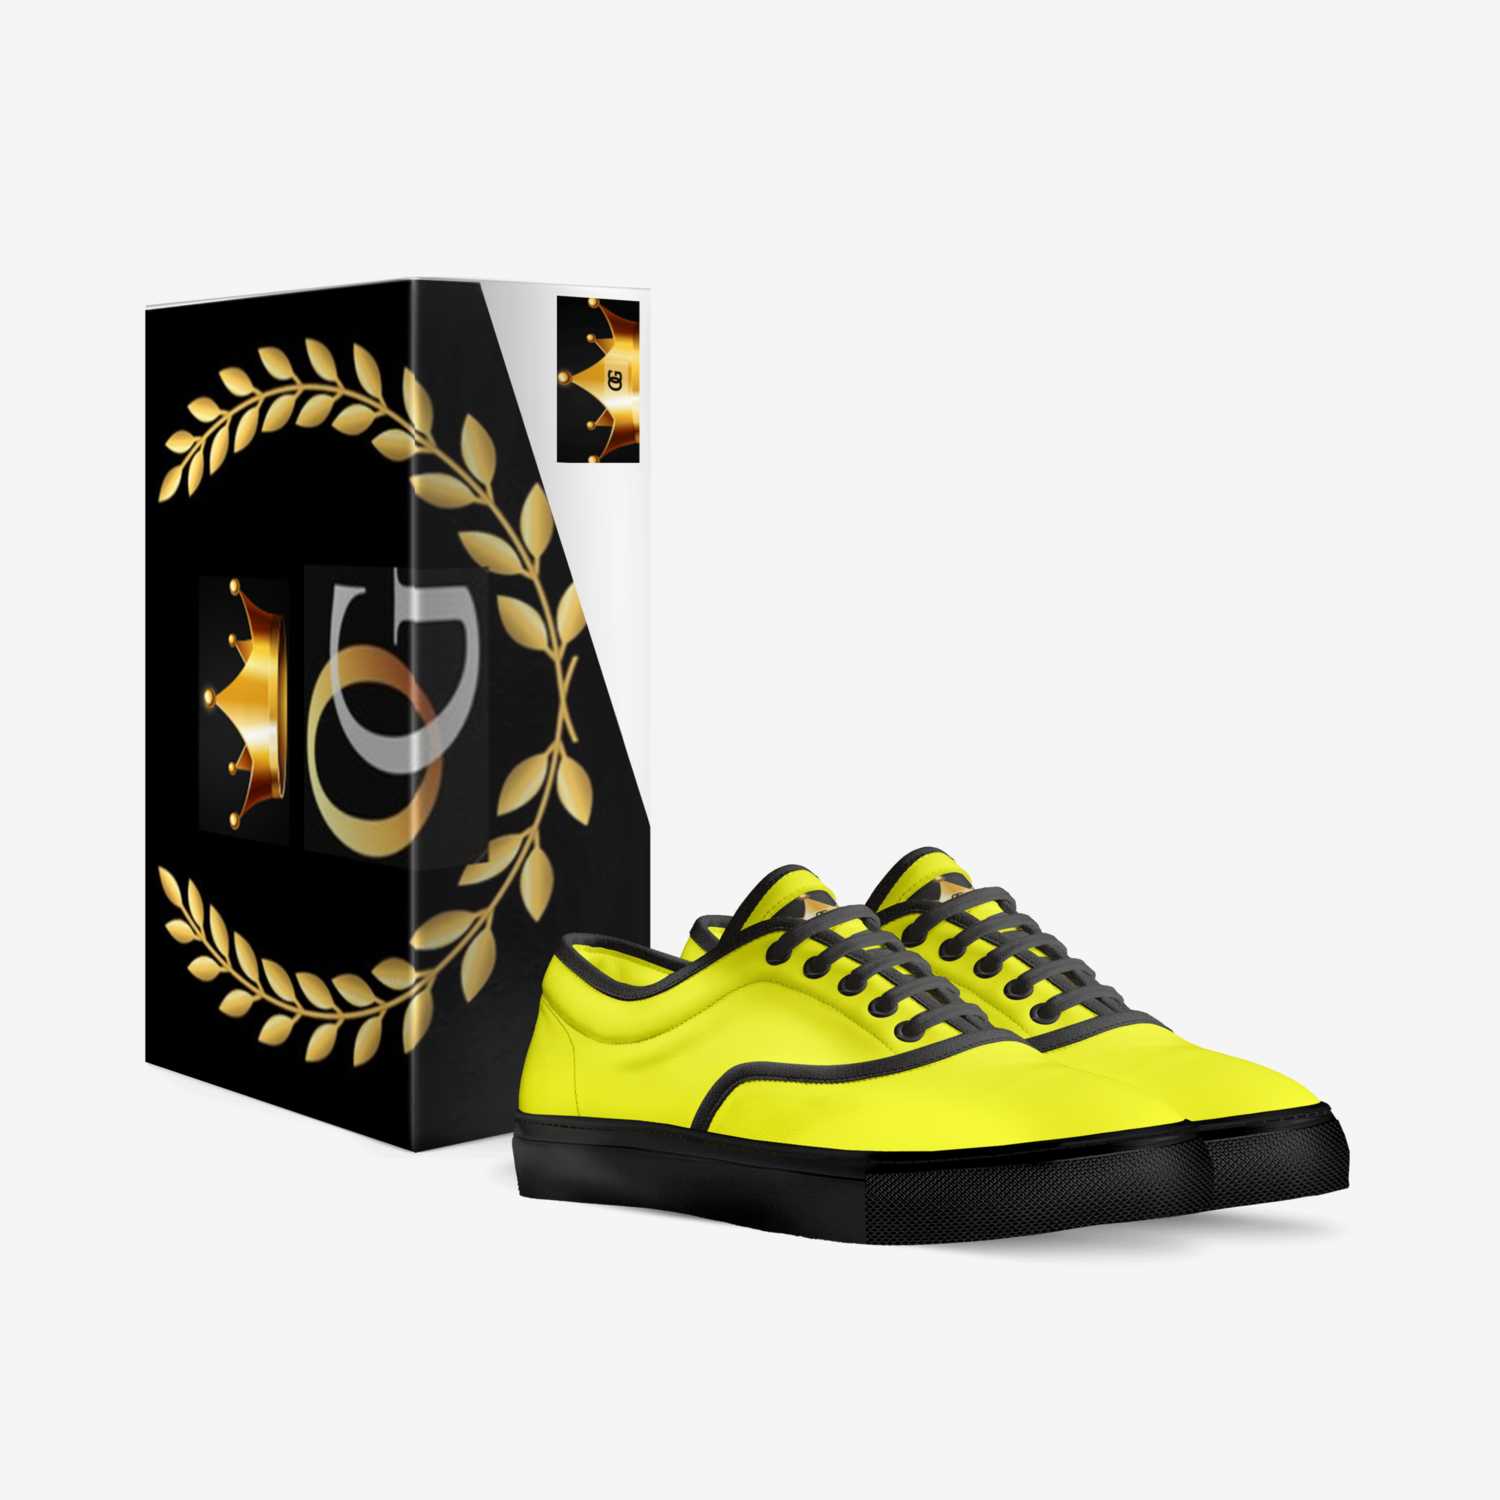 O.G 1 CANARY YELLO custom made in Italy shoes by K Walter Adams I | Box view